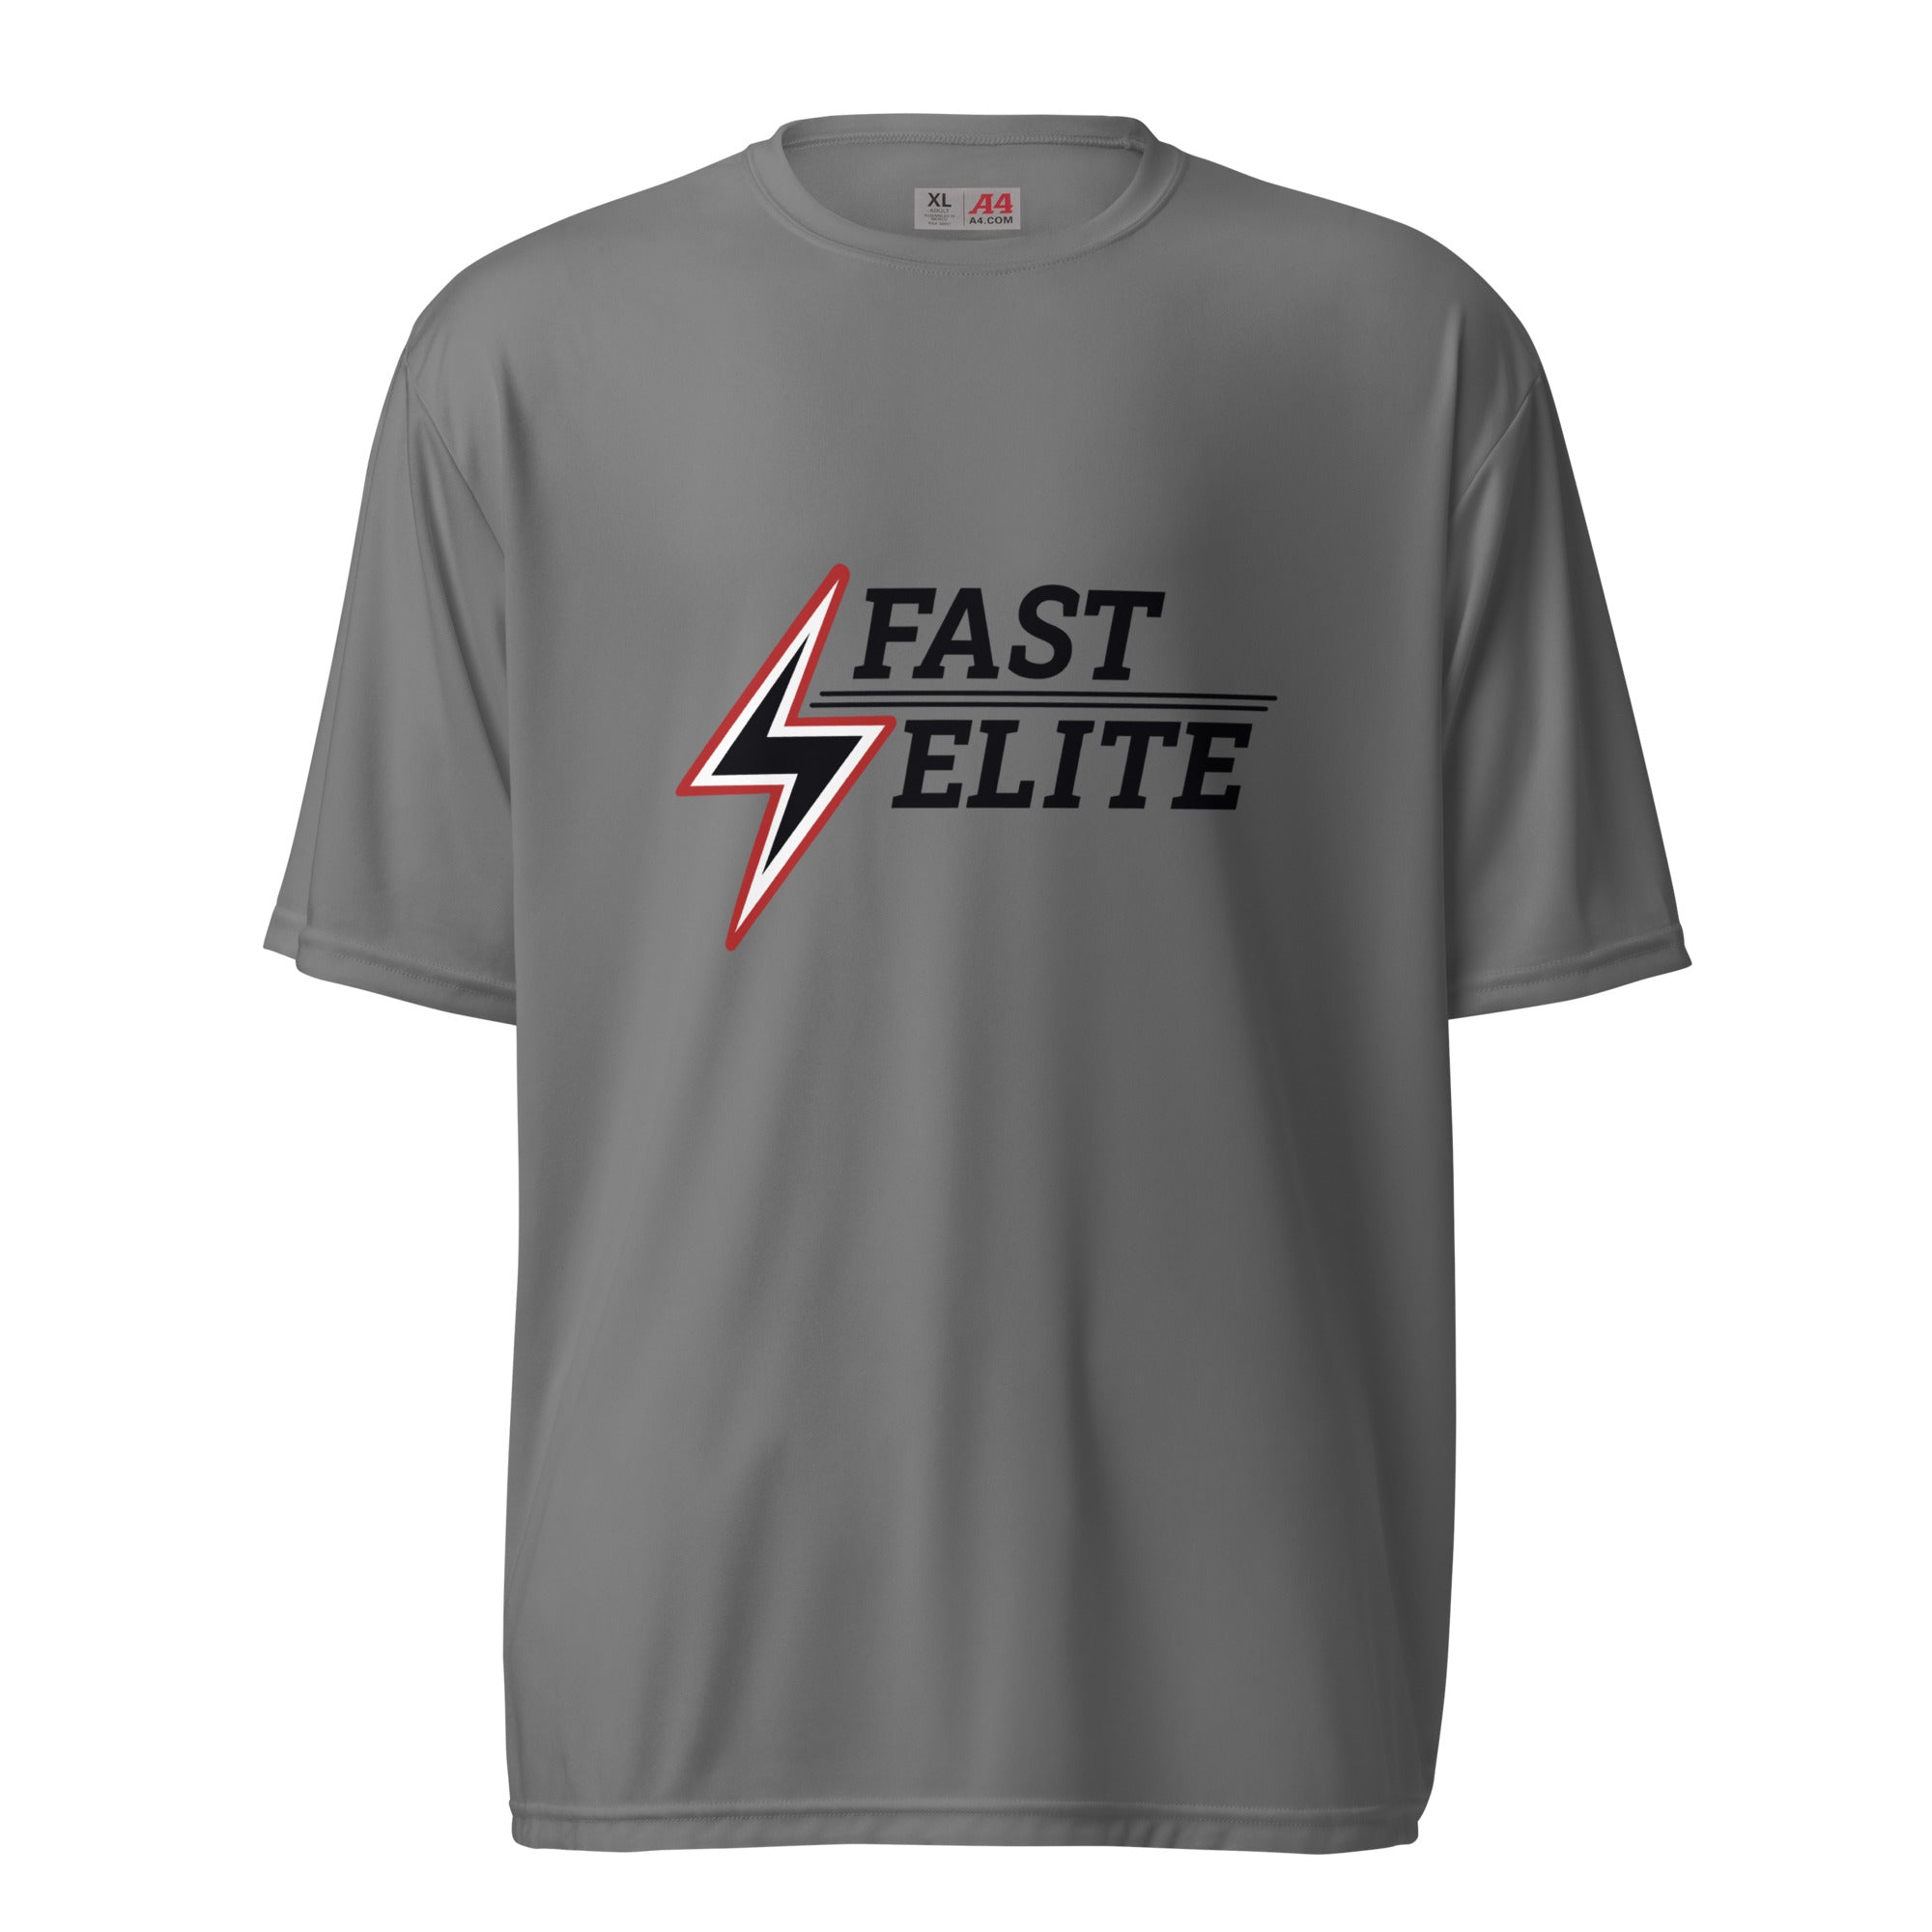 Fast Elite Unisex performance crew neck t-shirt